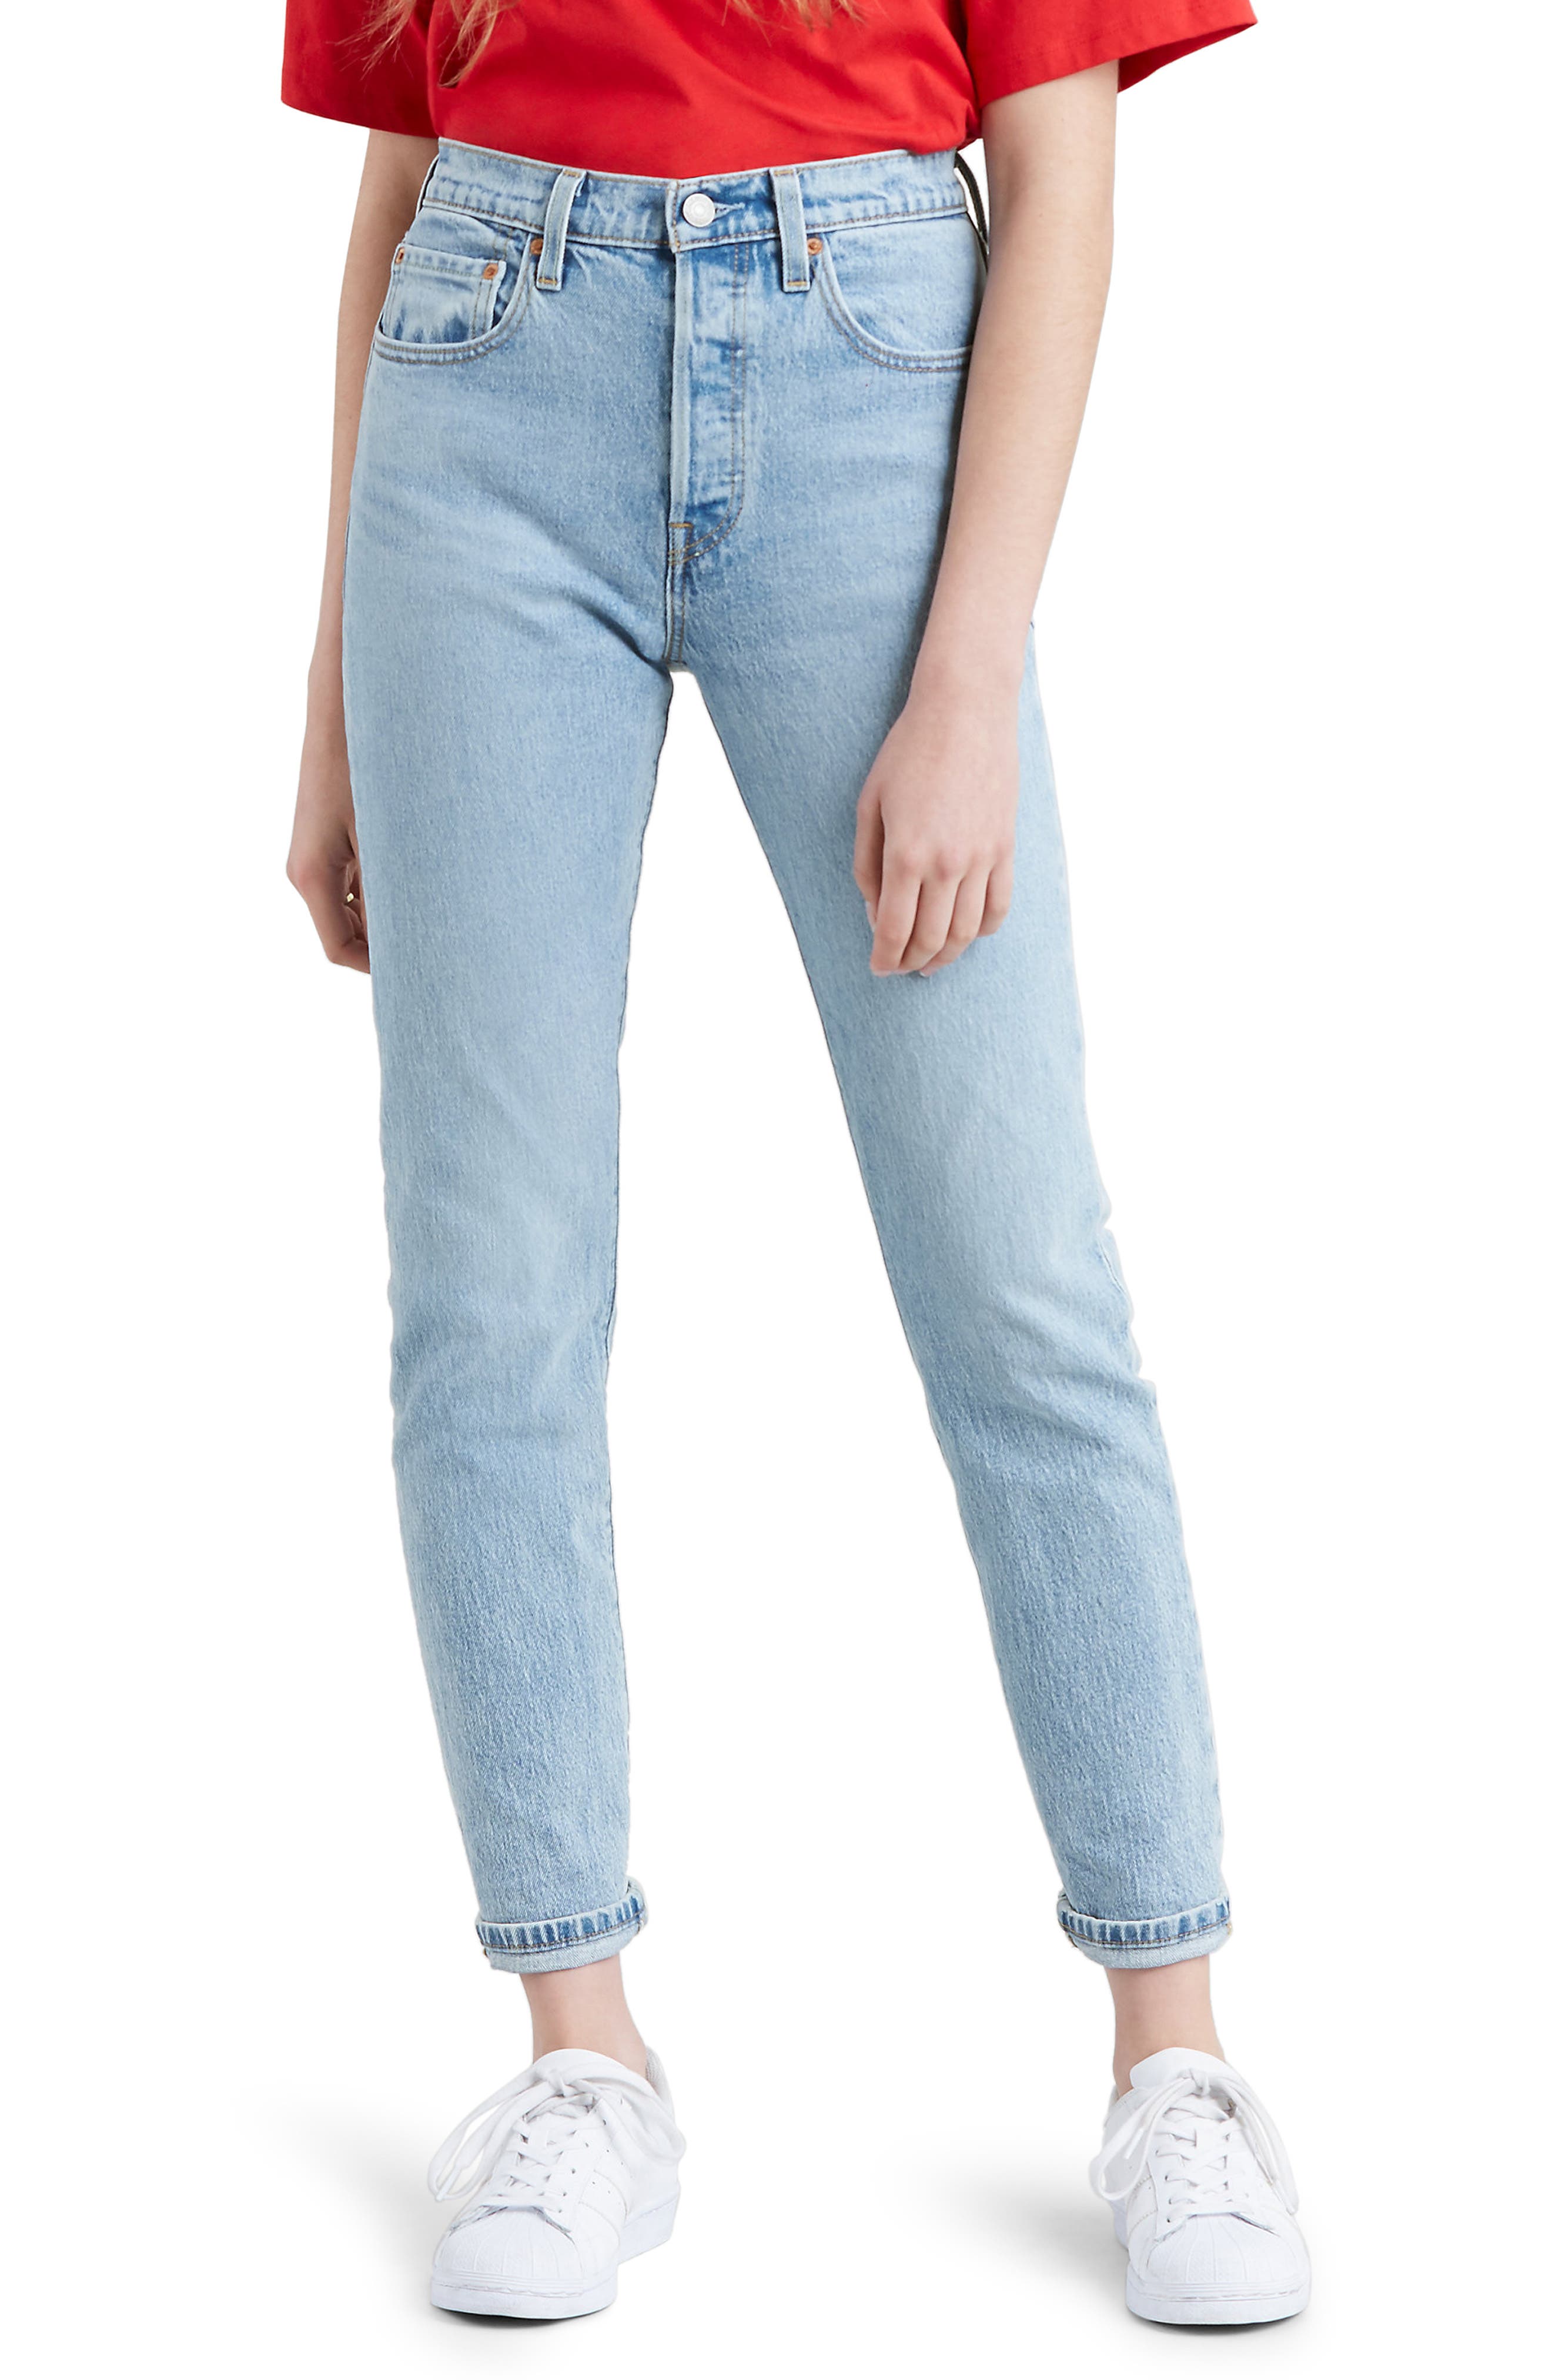 501 skinny distressed light wash jeans